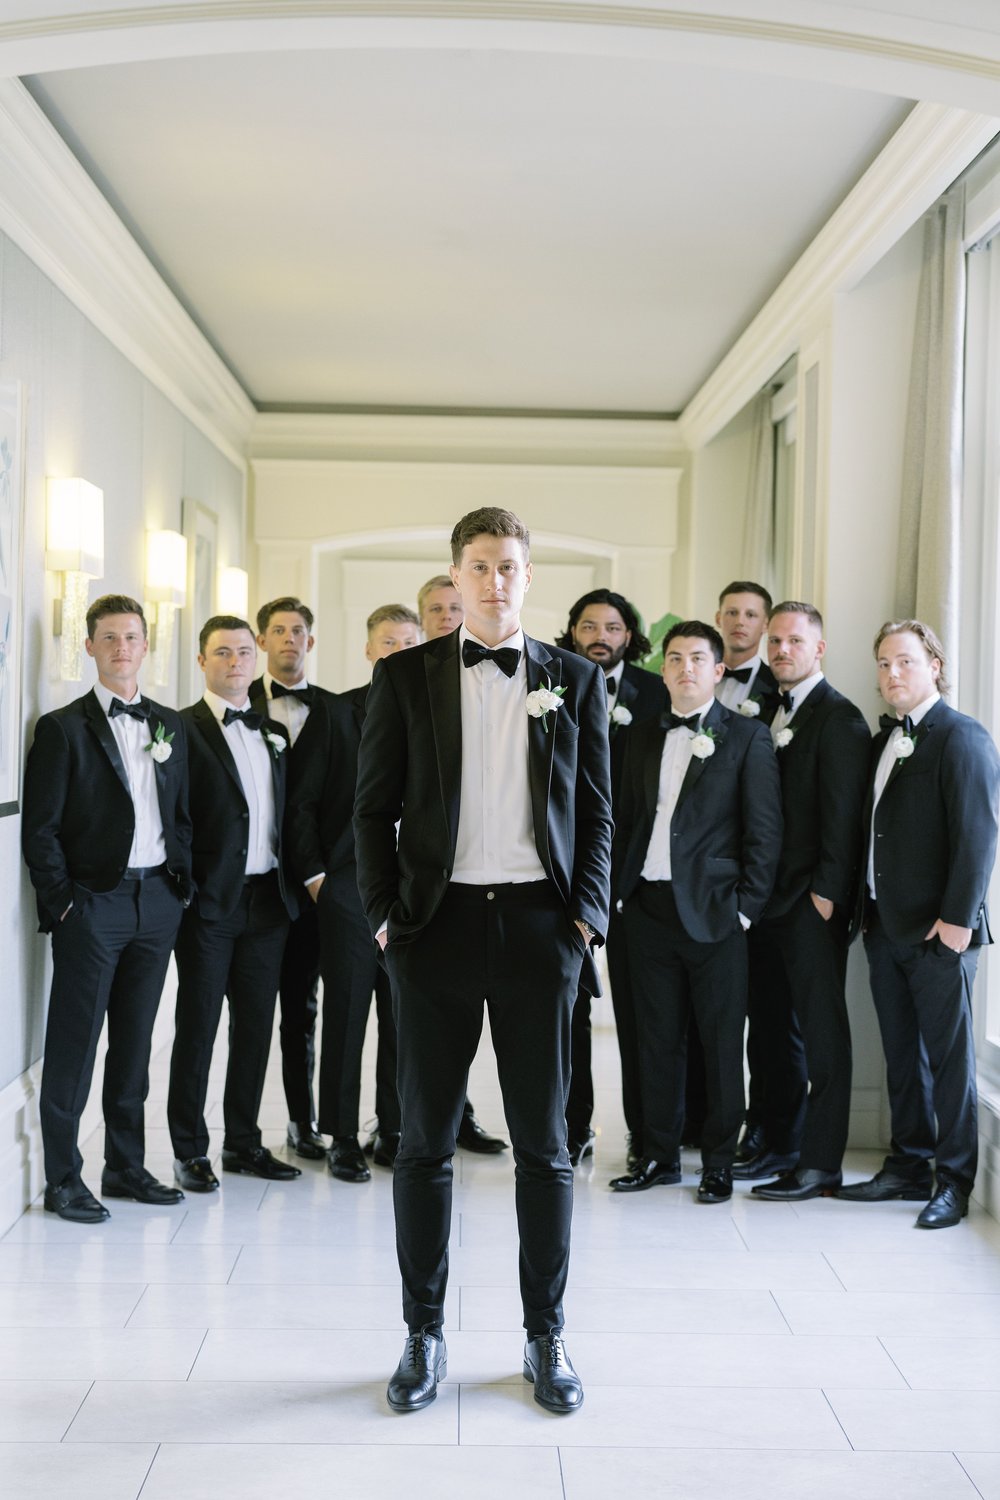 groomsmen inspiration at the ritz carlton in the white hallway .jpg